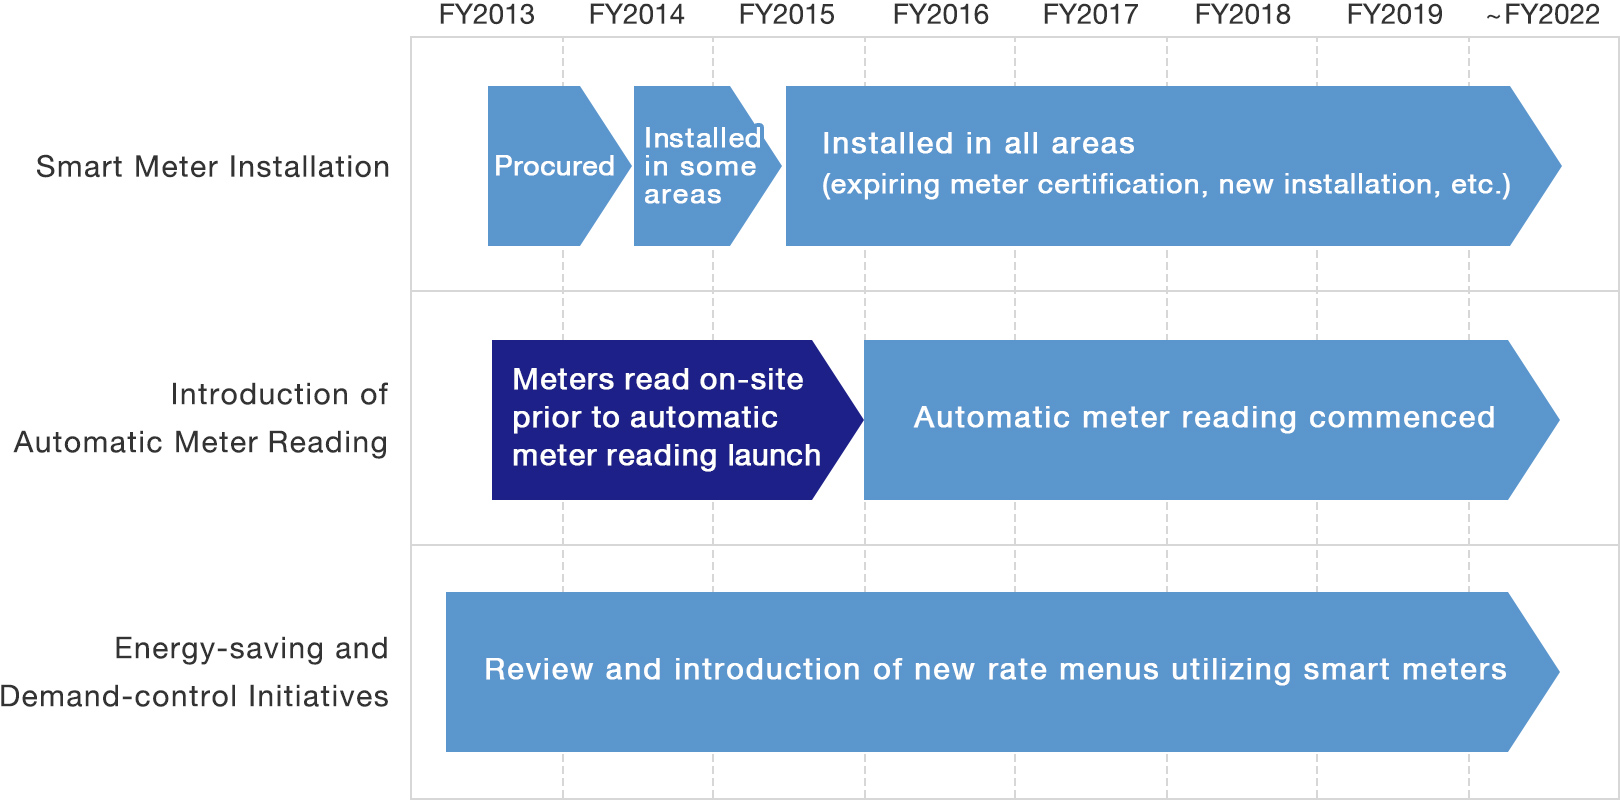 Overall Schedule for Smart Meter Installation